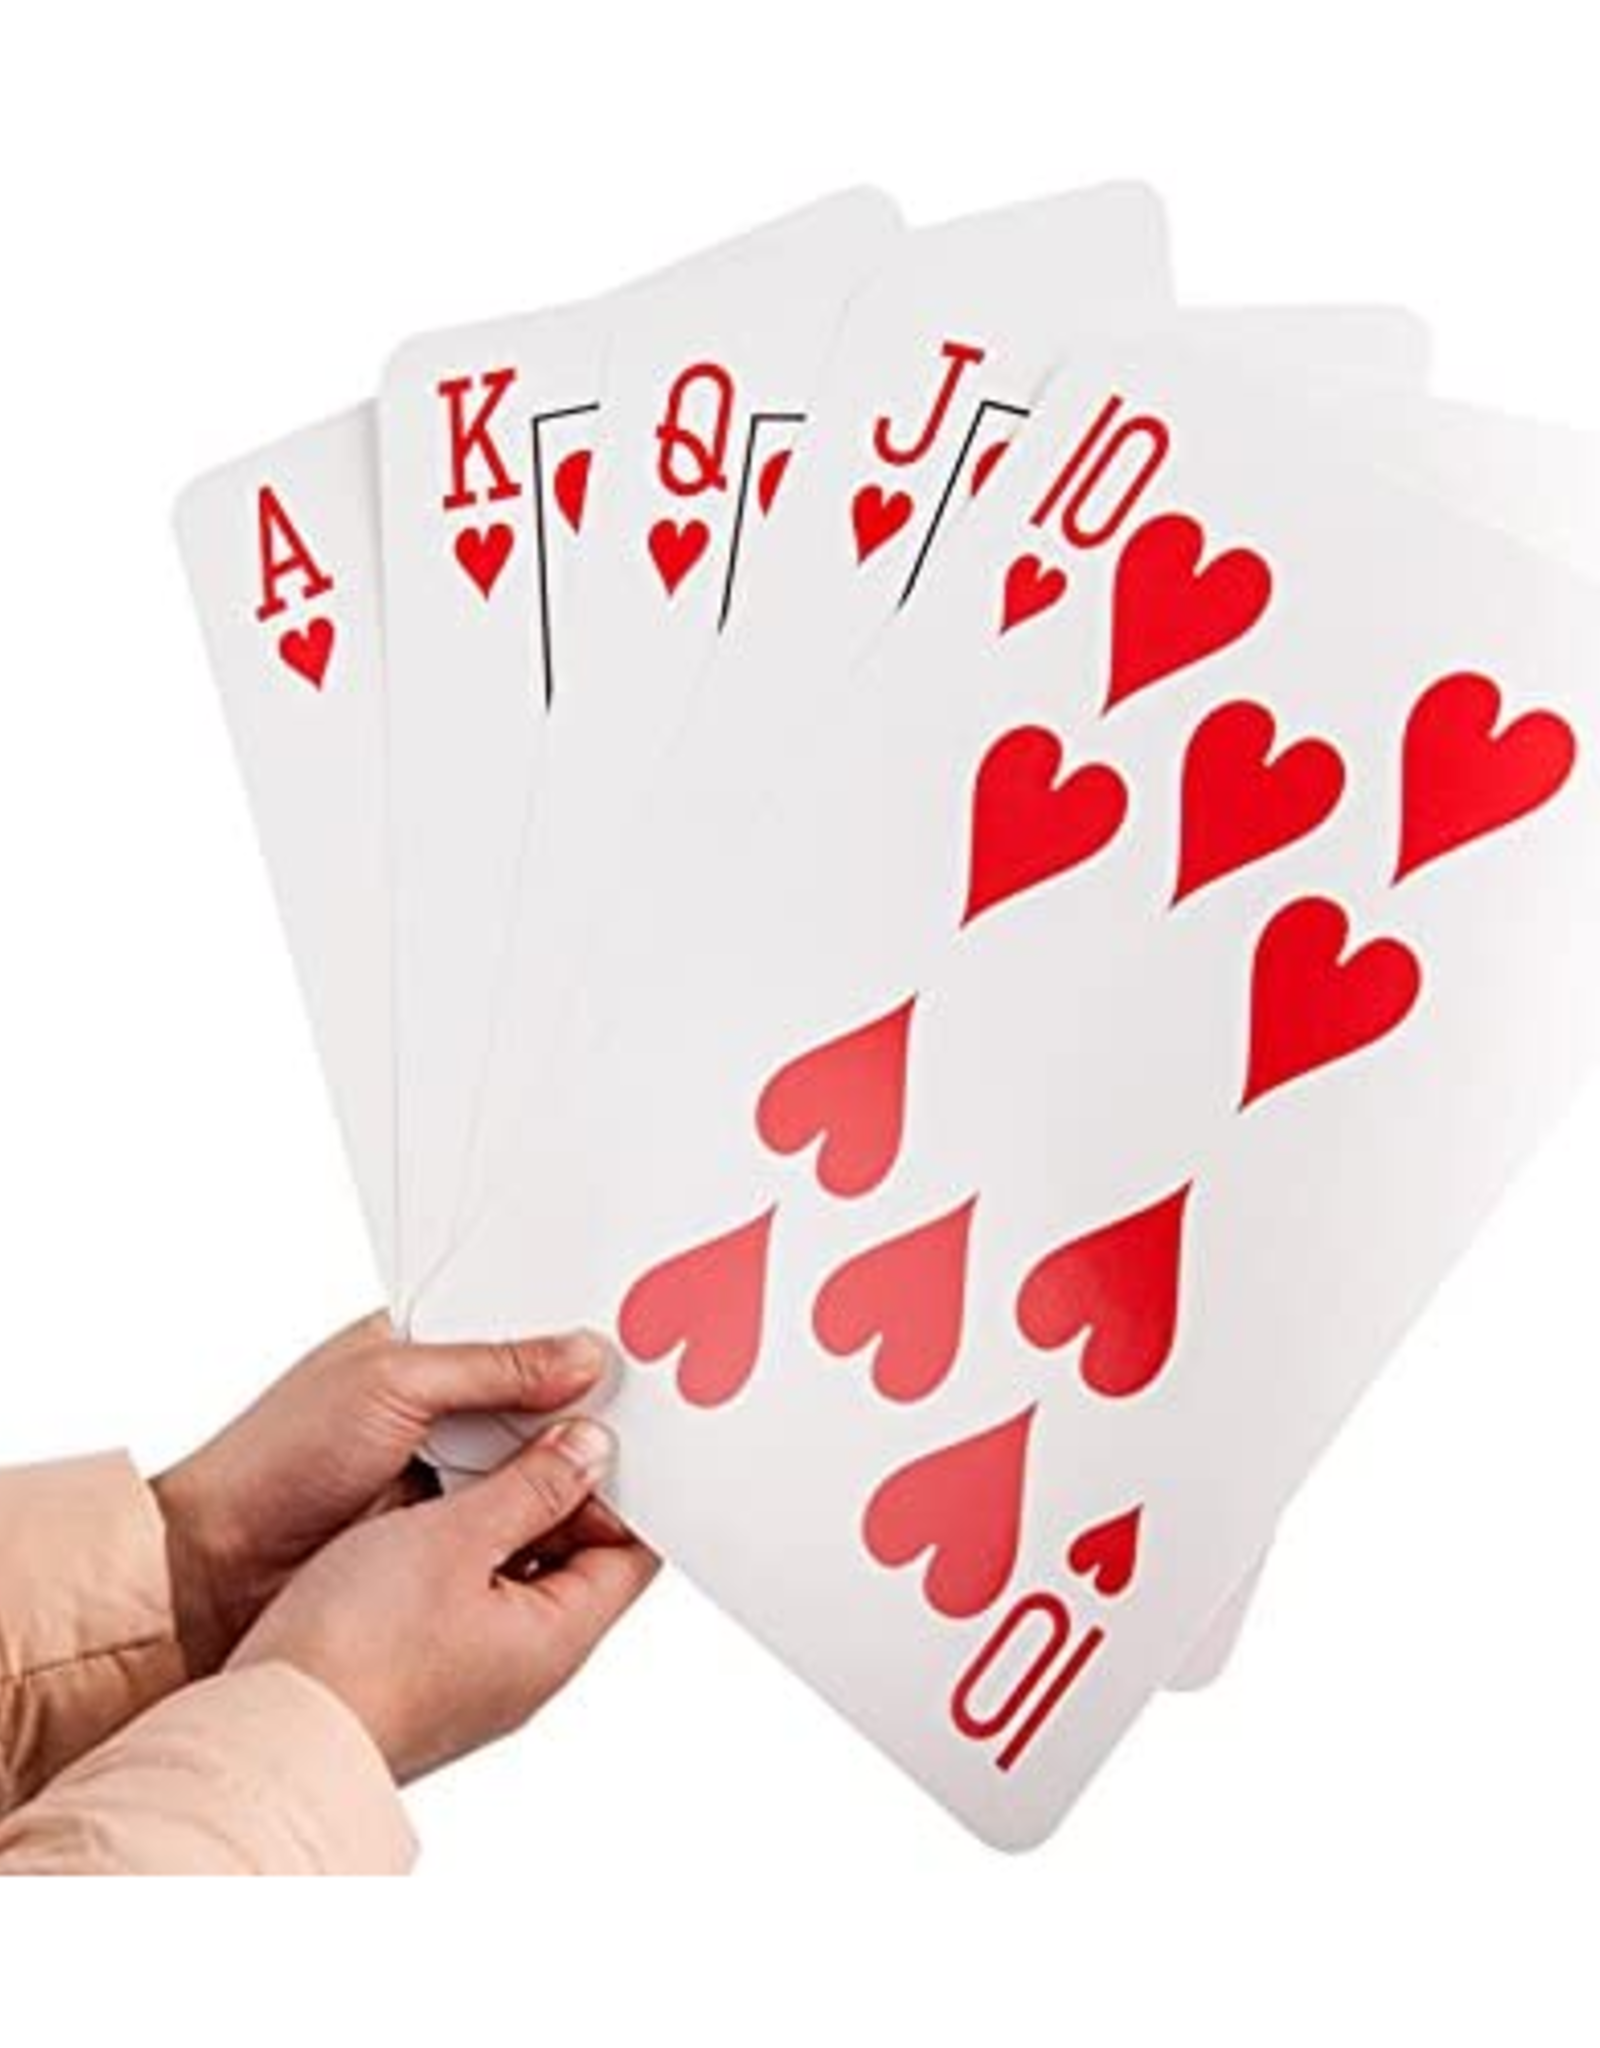 Zibbers - Jumbo Playing Cards 8 x 11